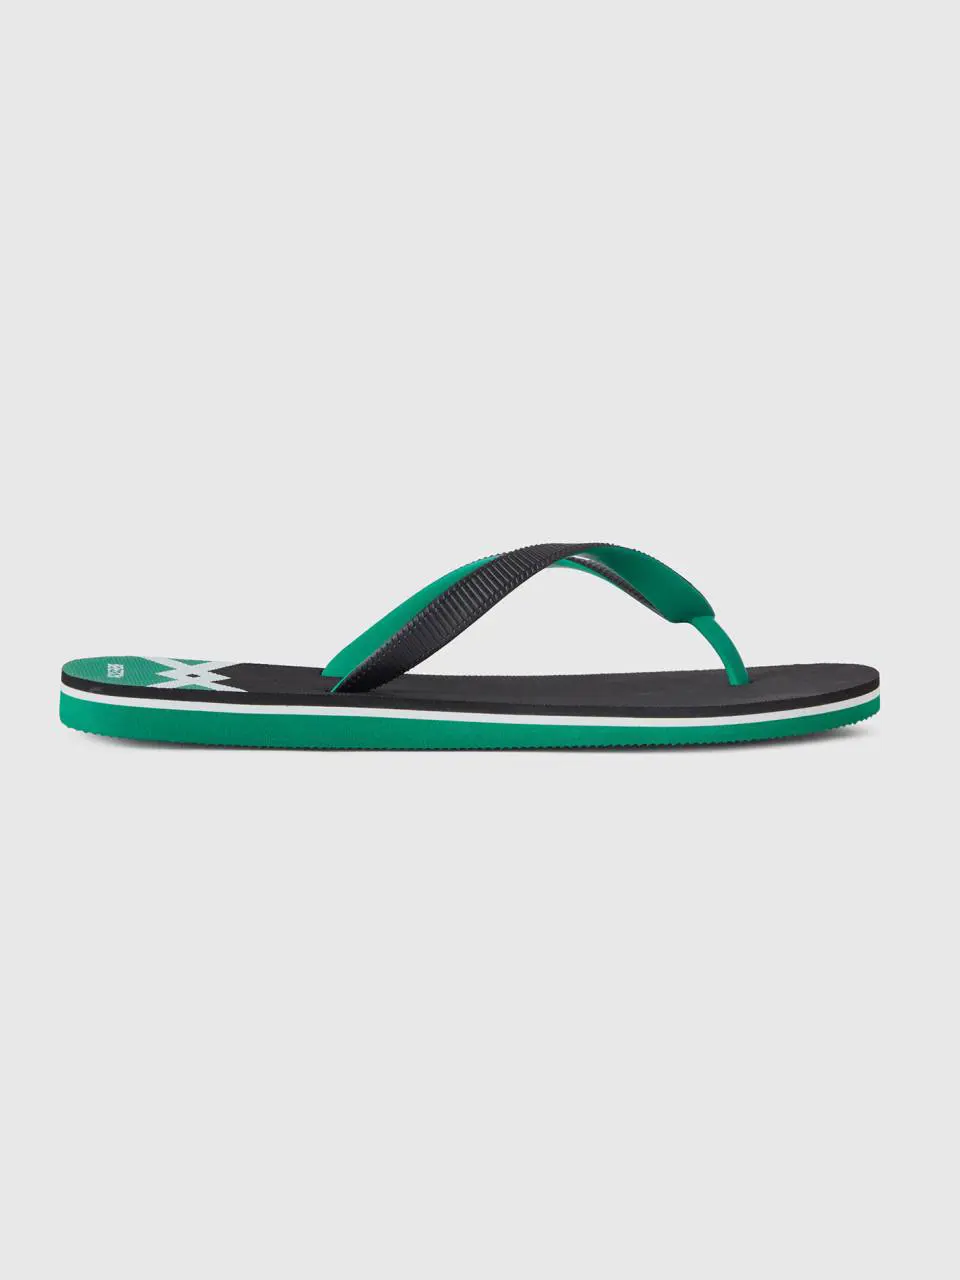 Benetton flip flops in lightweight rubber. 1